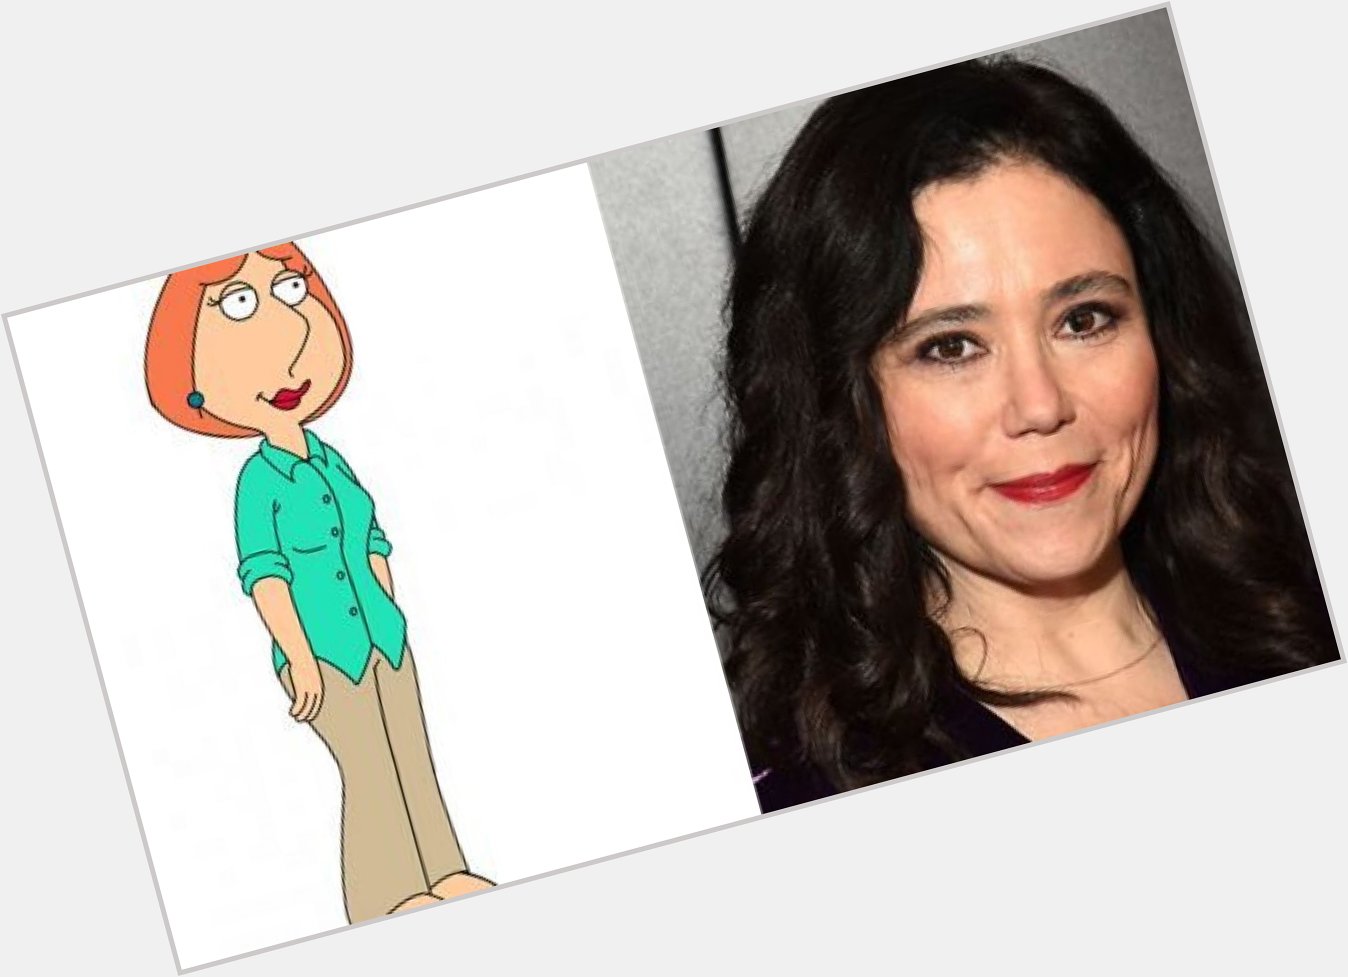 Happy 49th Birthday to Alex Borstein! The voice of Lois Griffin on Family Guy. 